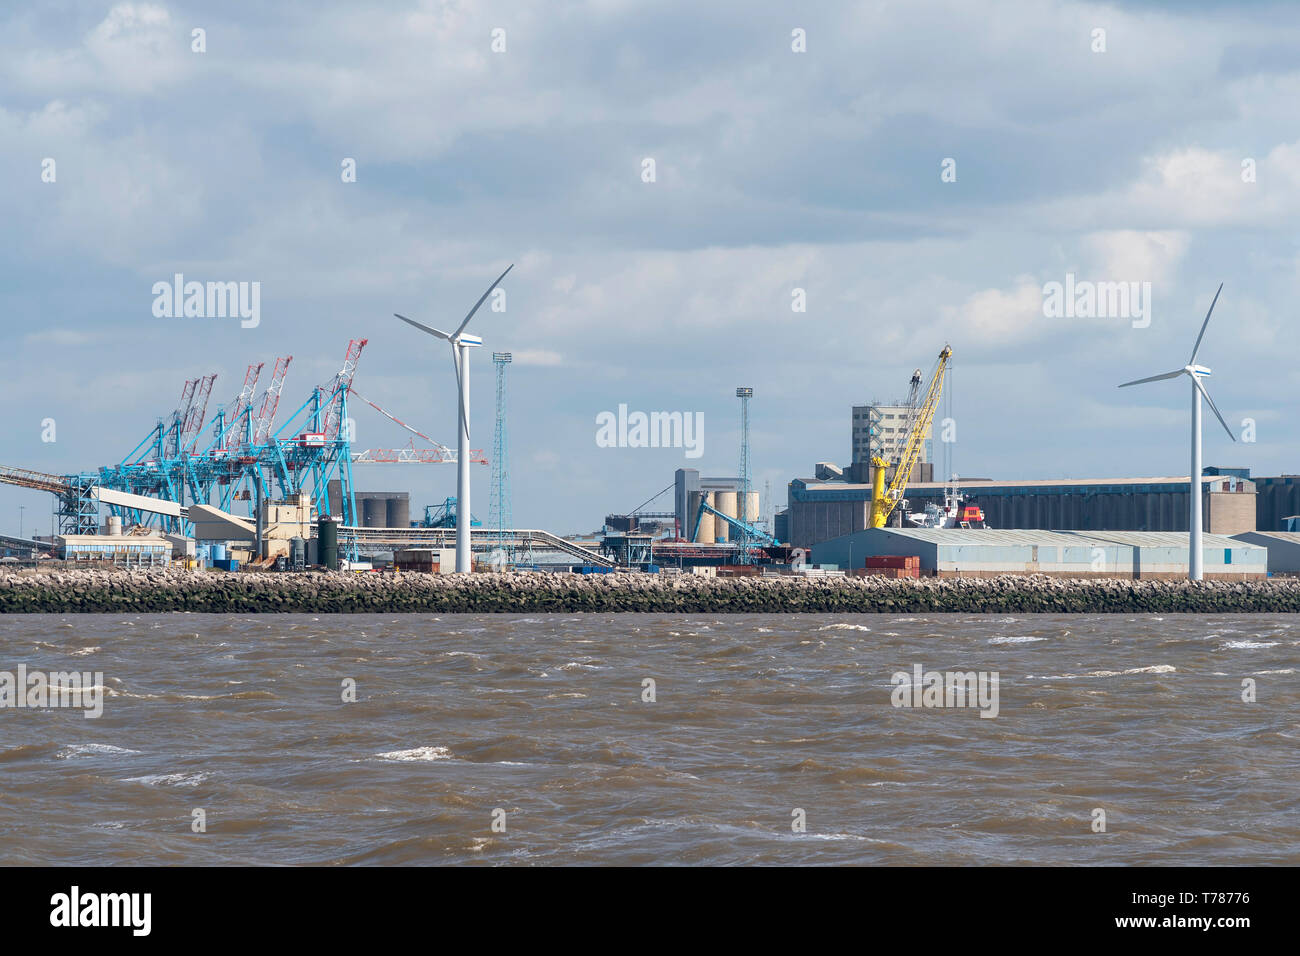 Seaforth docks Liverpool. Giant cranes. Stock Photo